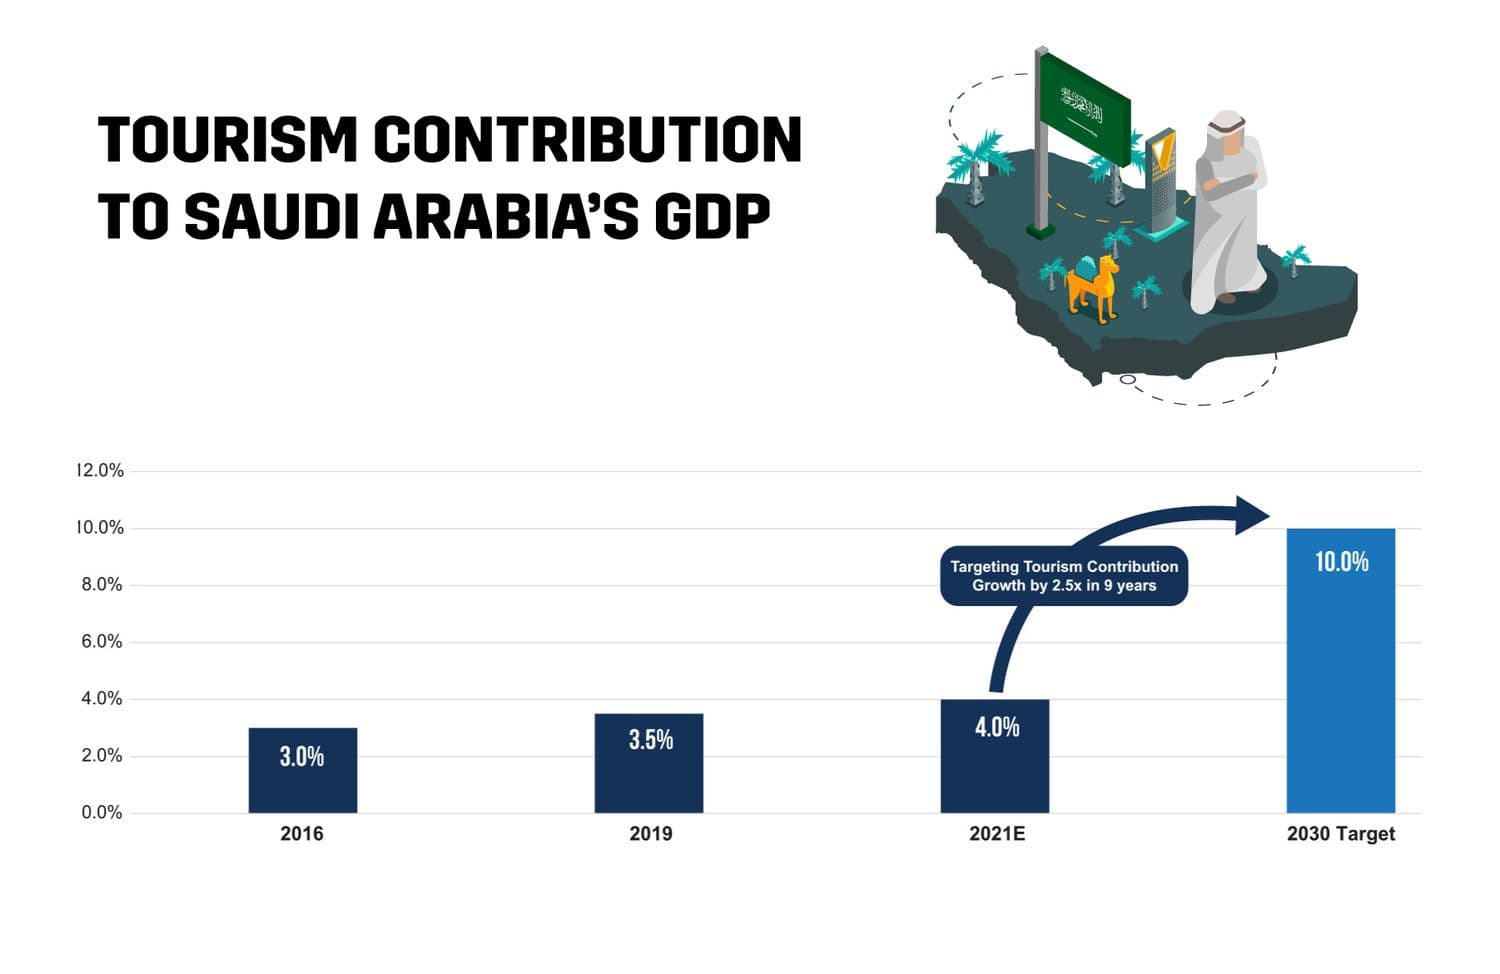 Tourism Contribution to Kingdom of Saudi Arabia's GDP – 2016 vs 2019 vs 2030 Target